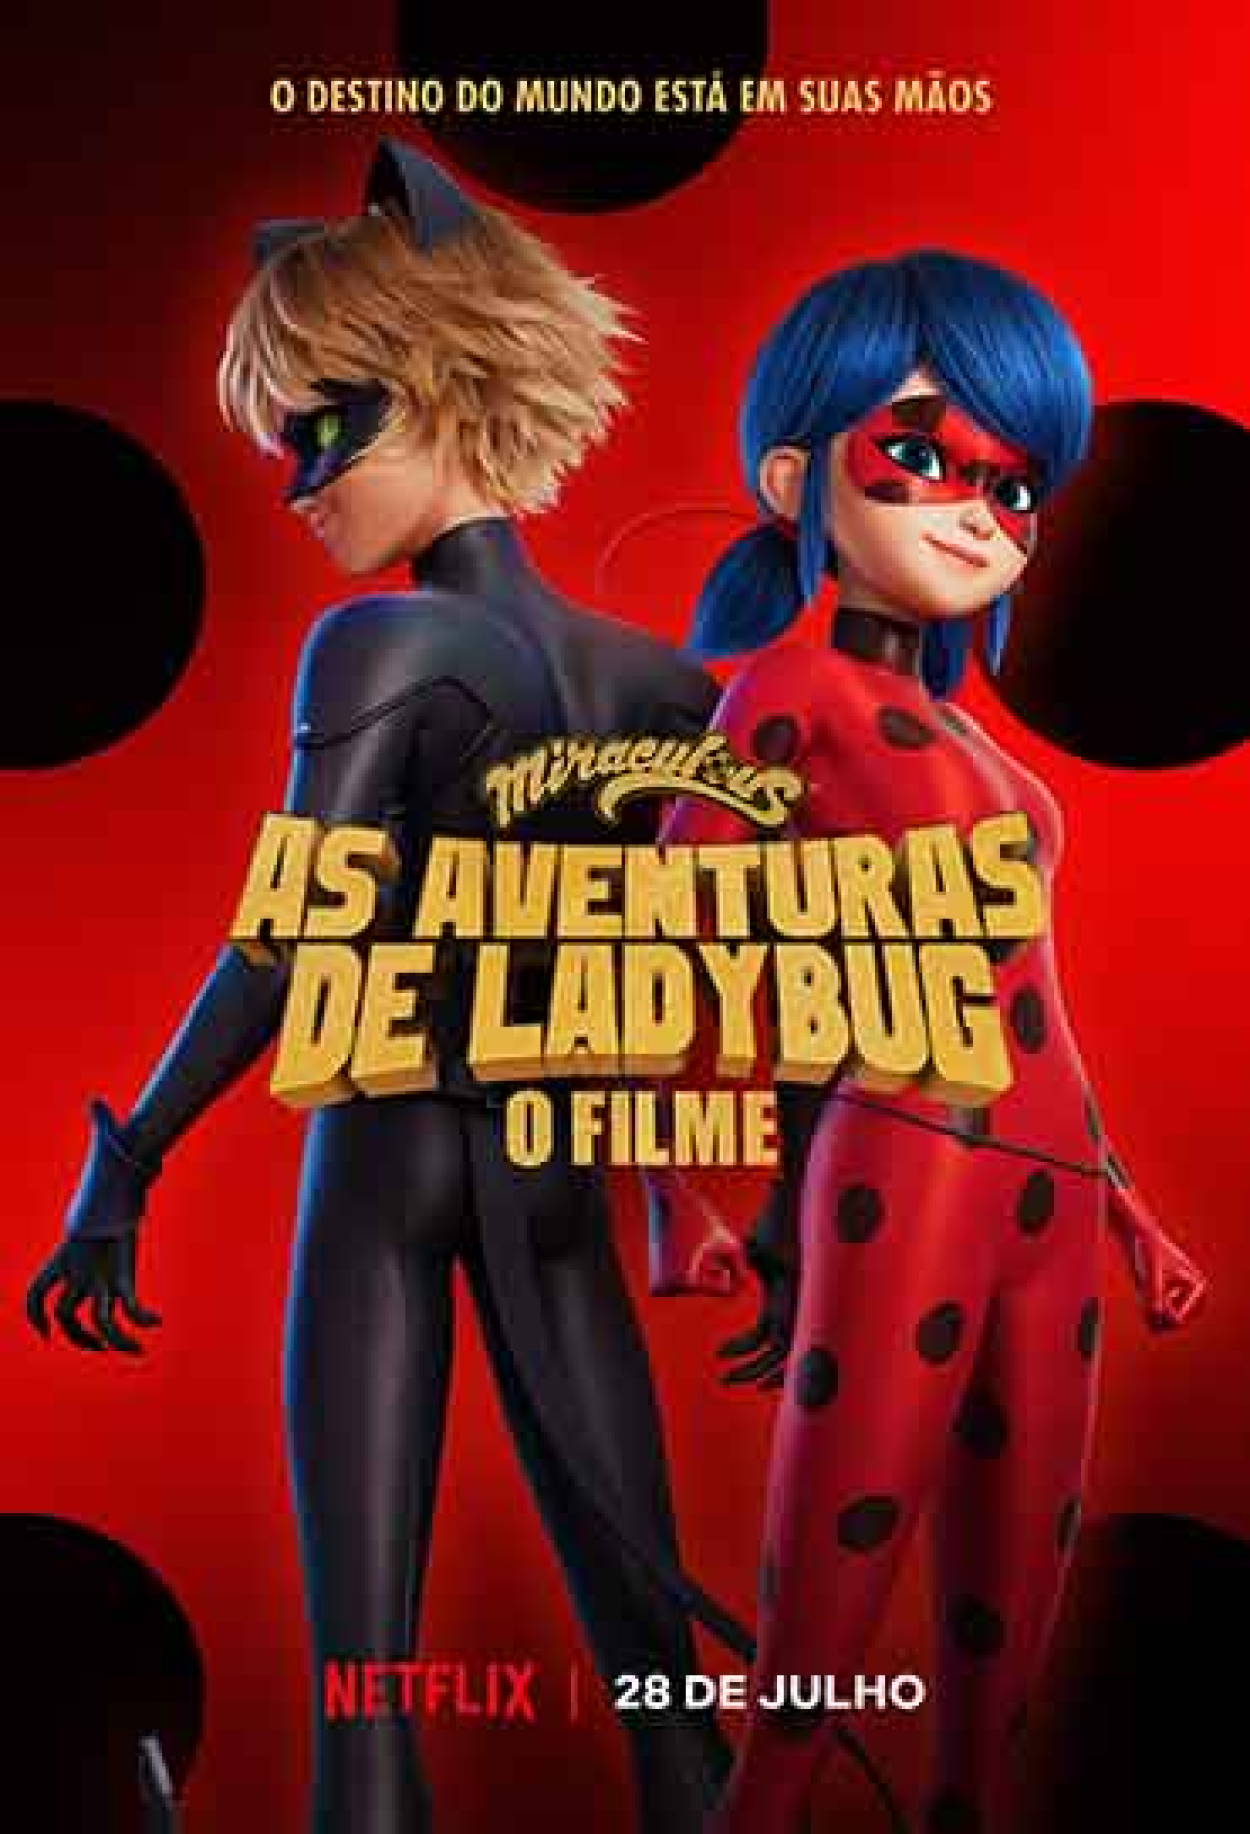 Miraculous: As Aventuras de Ladybug - O Filme (Filme), Trailer